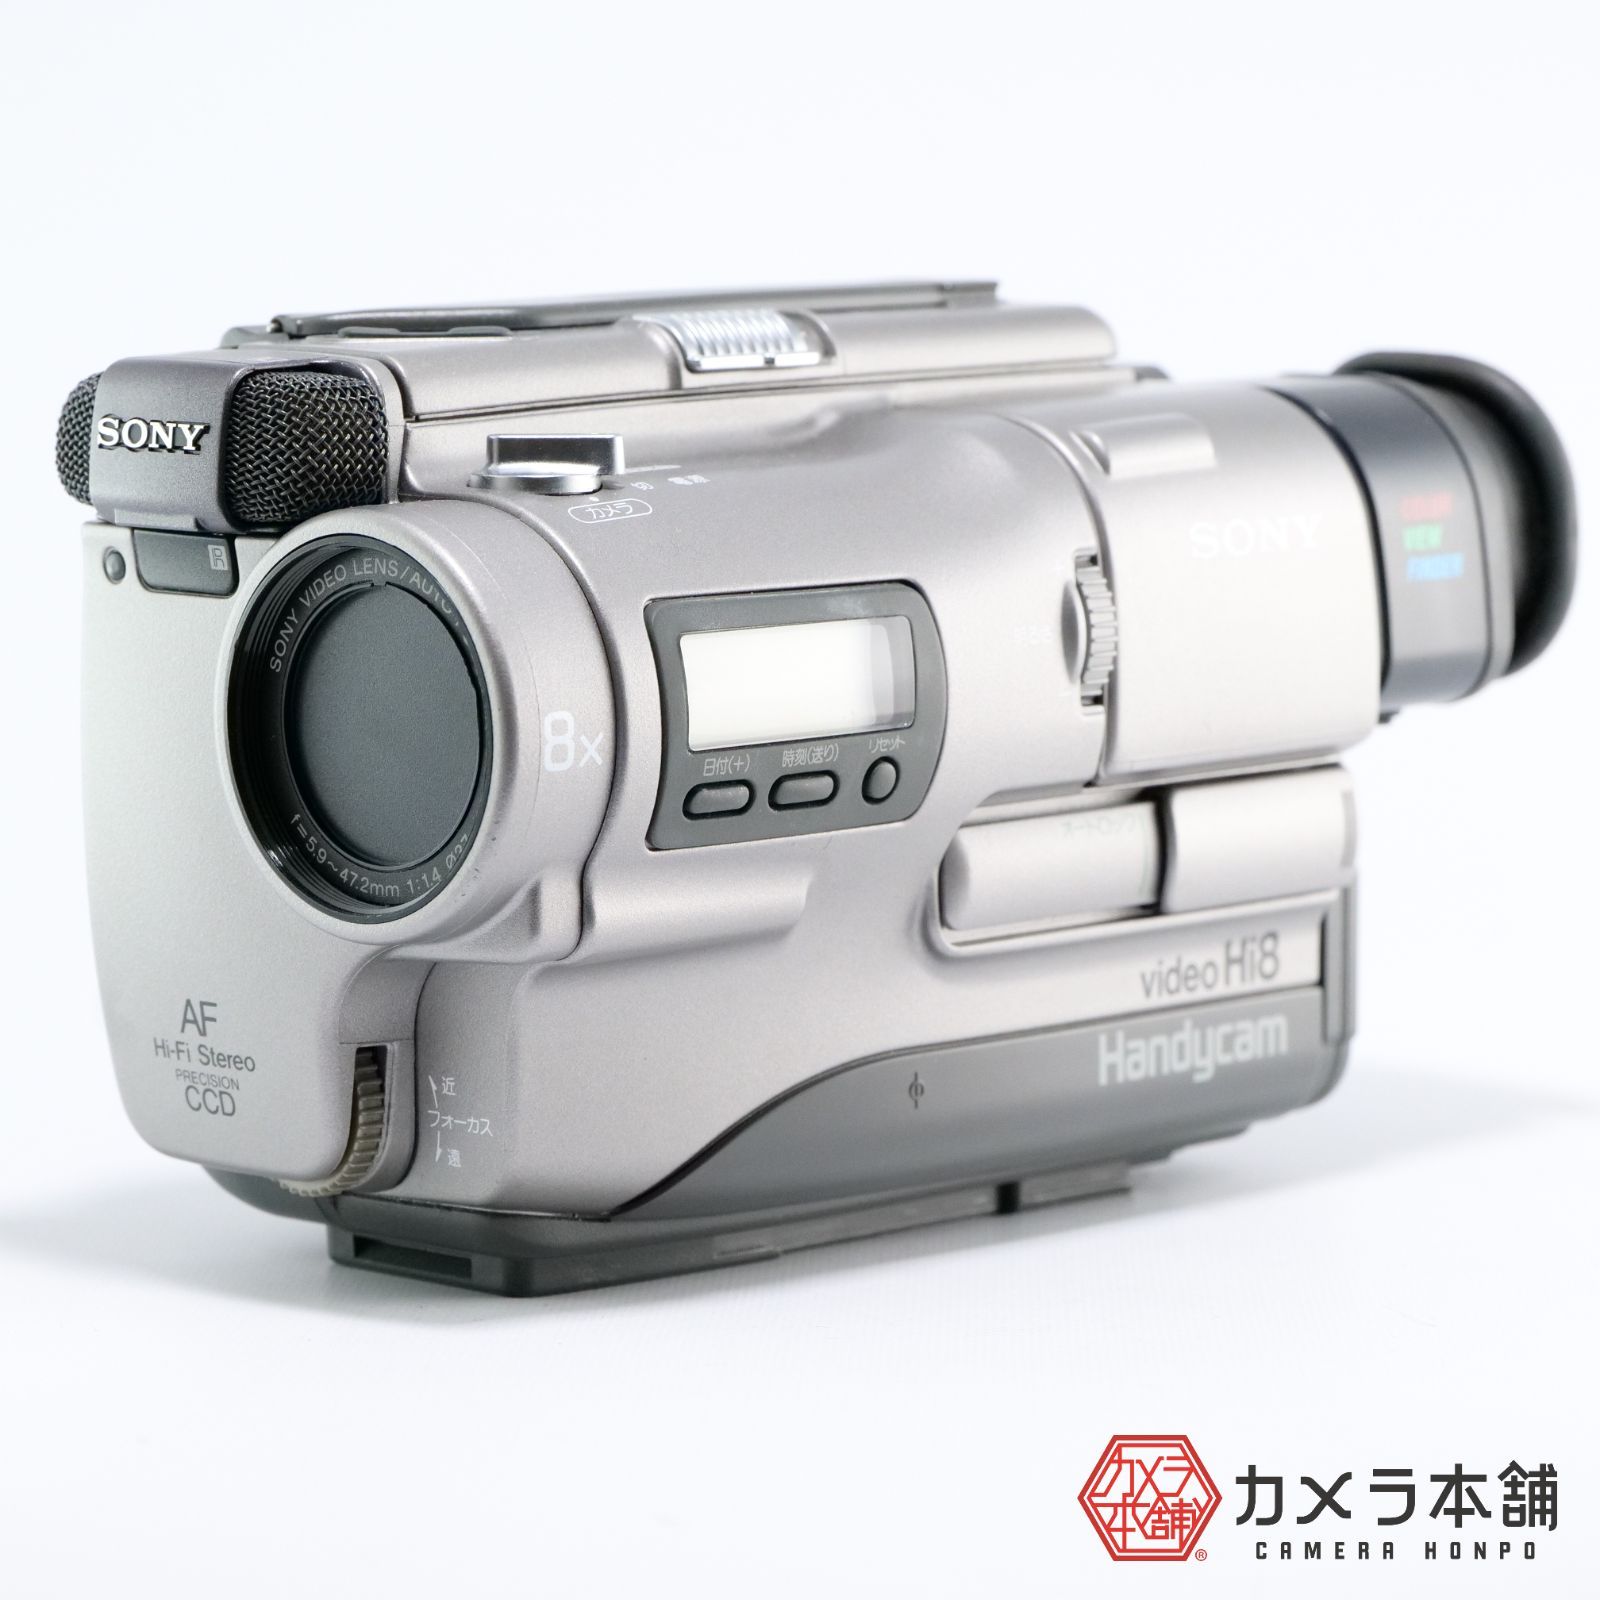 SONY CCD-TR1 Hi8ビデオカメラ ハンディカム Handycam - メルカリ